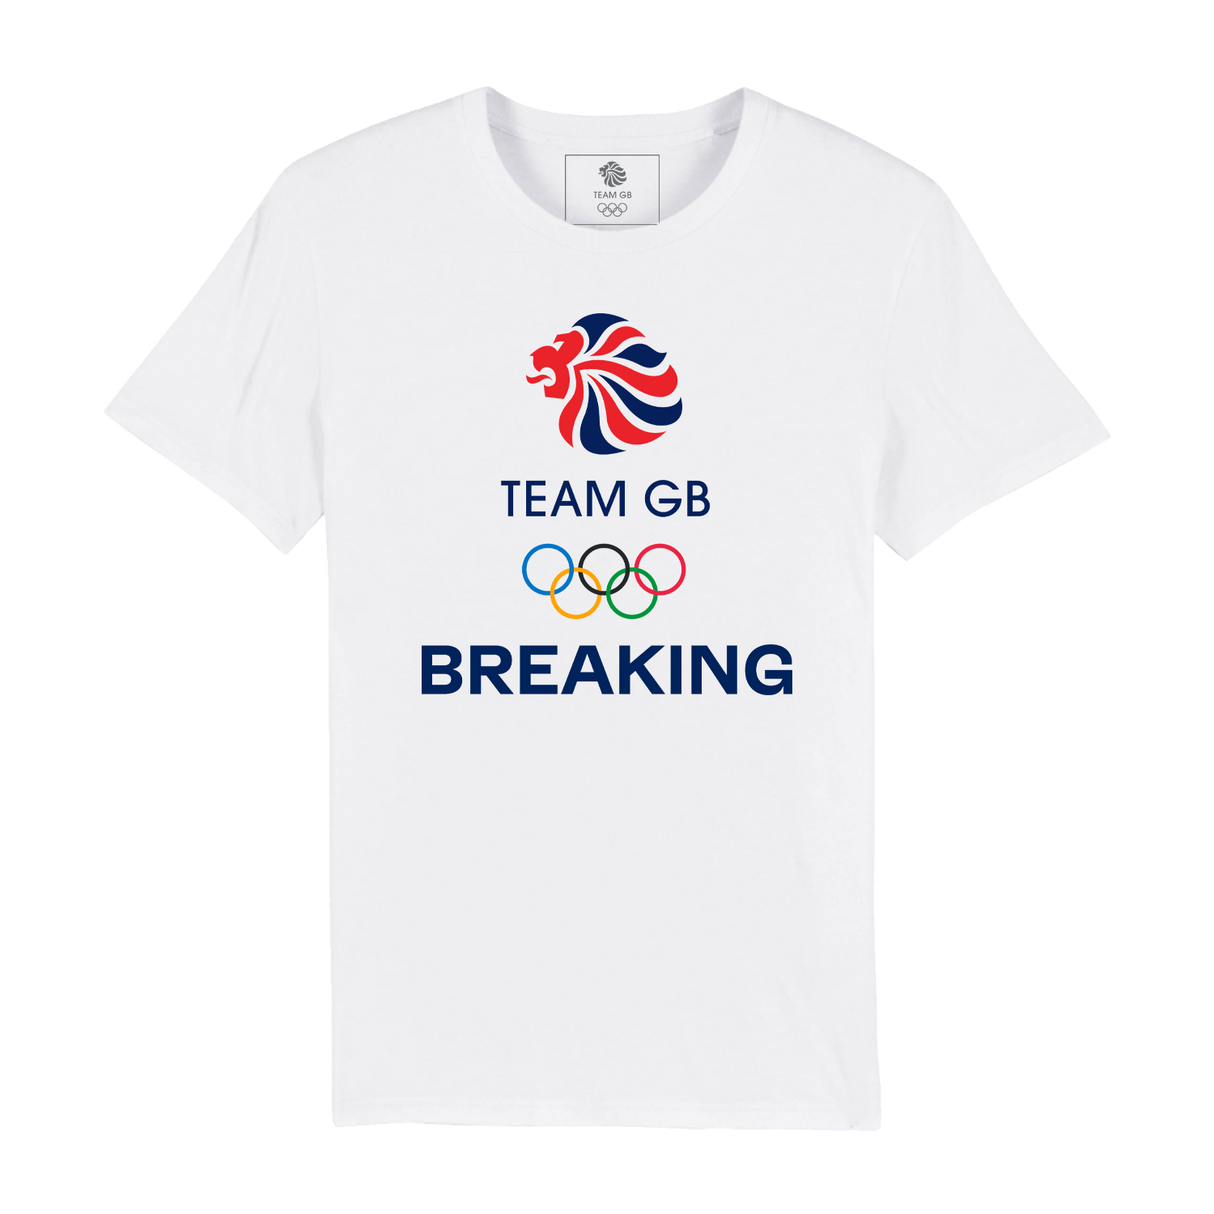 Team GB Breaking Classic T-Shirt